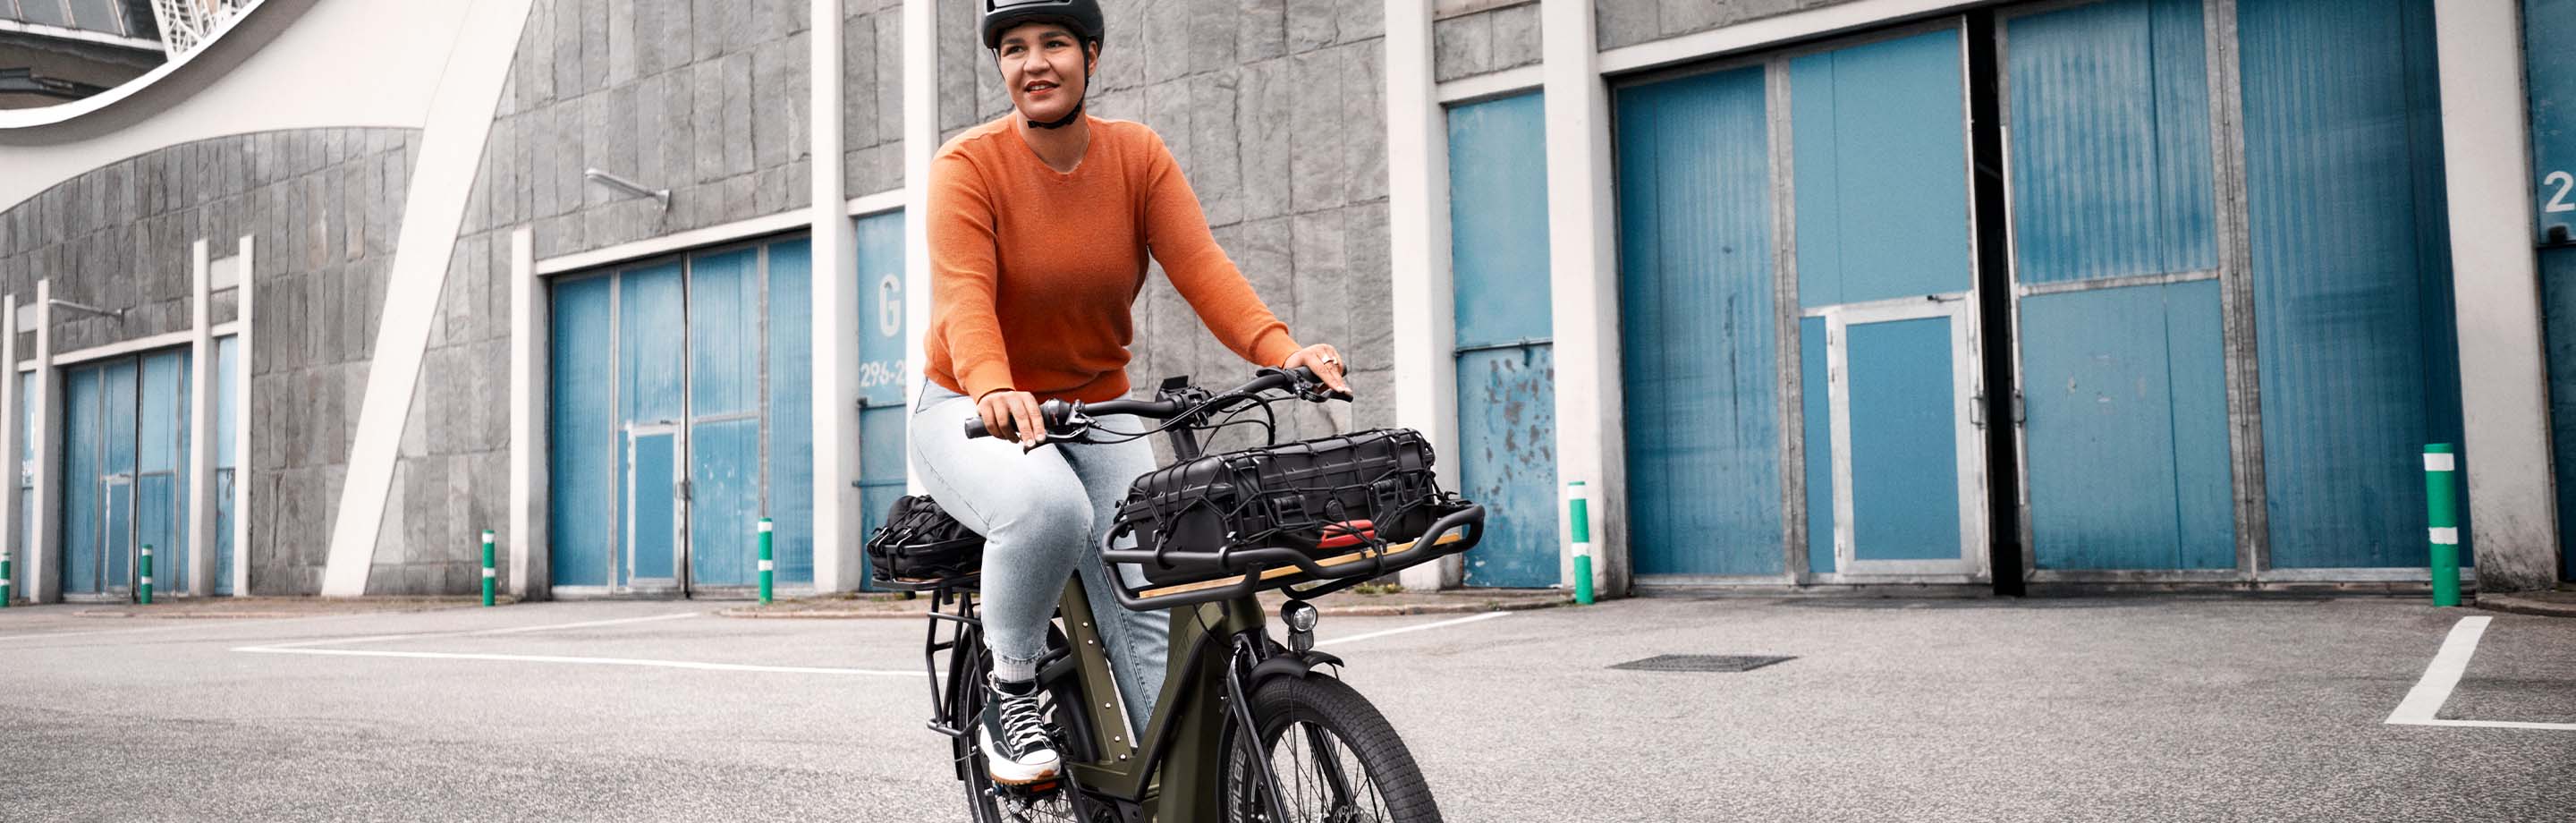 Bergamont – Premium Fahrräder & E-Bikes designed in Hamburg